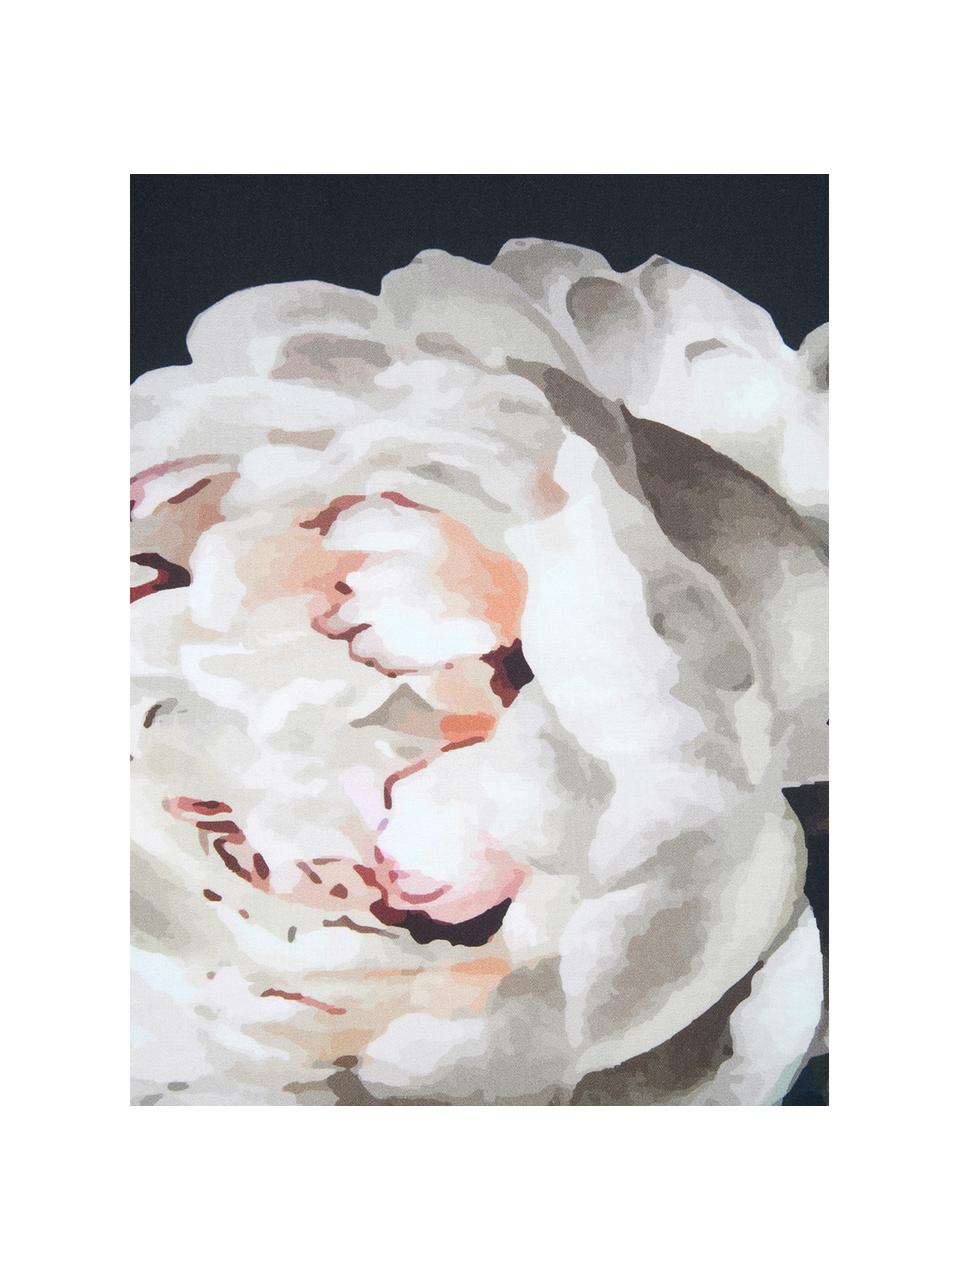 Fundas de almohada de satén Blossom, 2 uds., Negro, multicolor, An 45 x L 110 cm